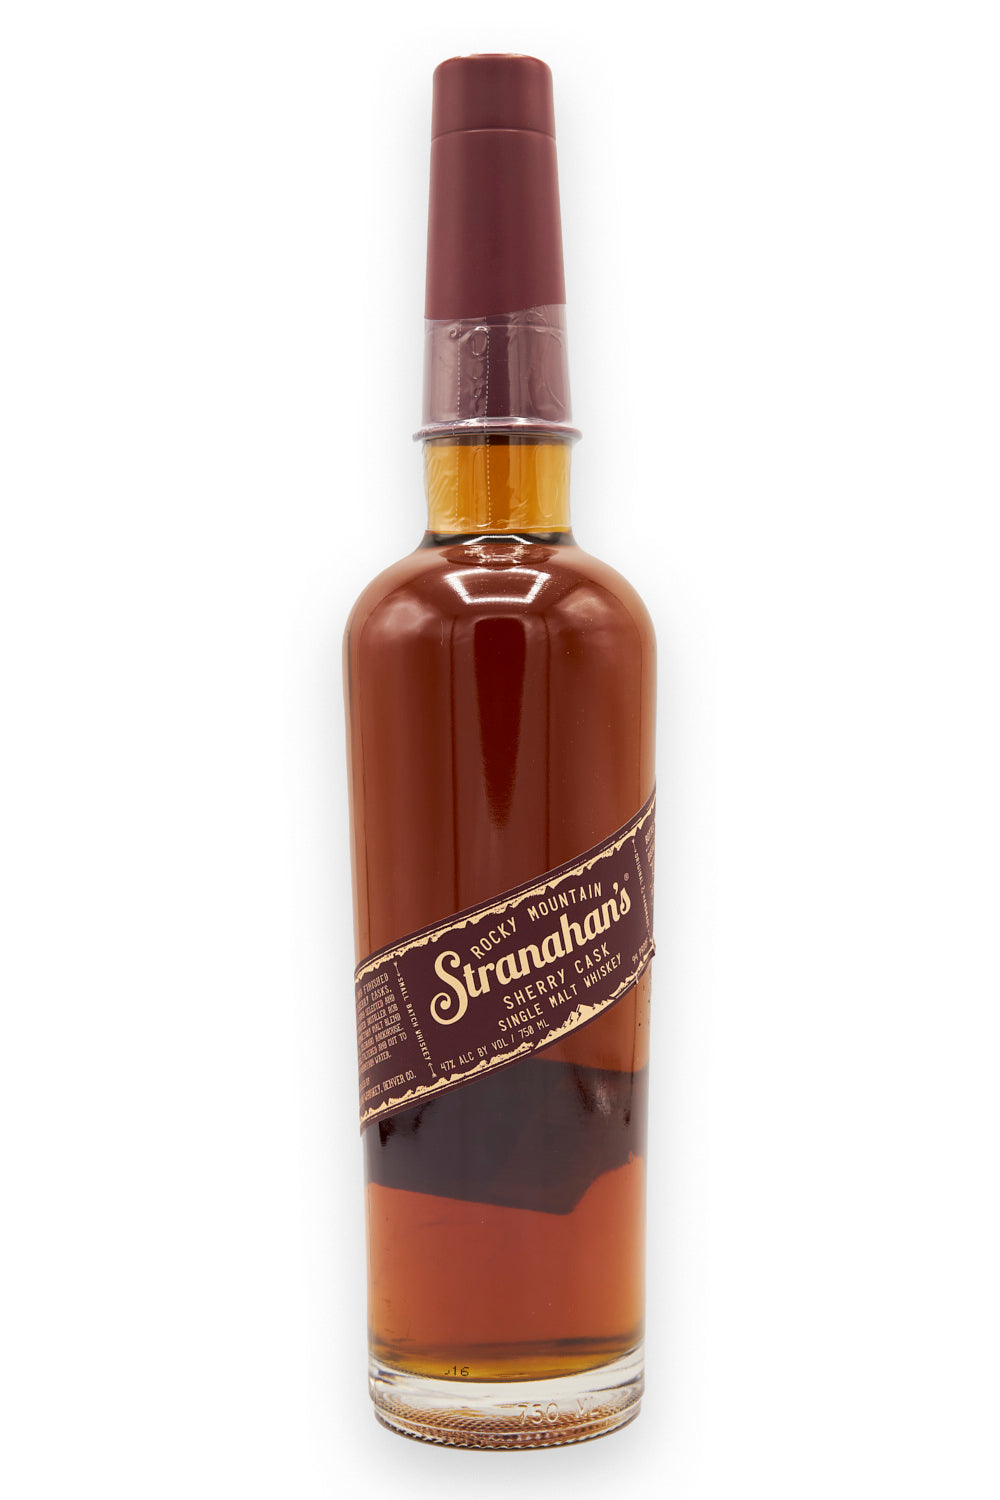 Stranahan's Sherry Cask Whiskey